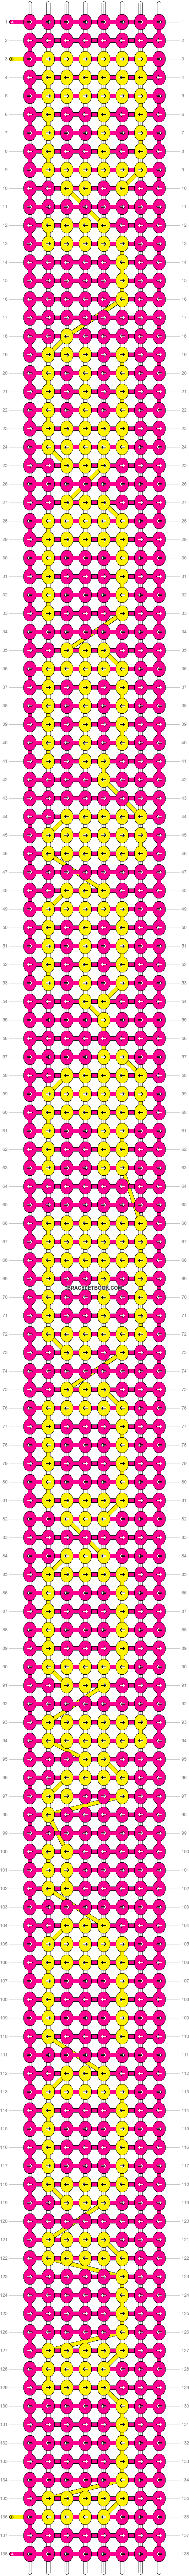 Alpha pattern #510 variation #40645 pattern